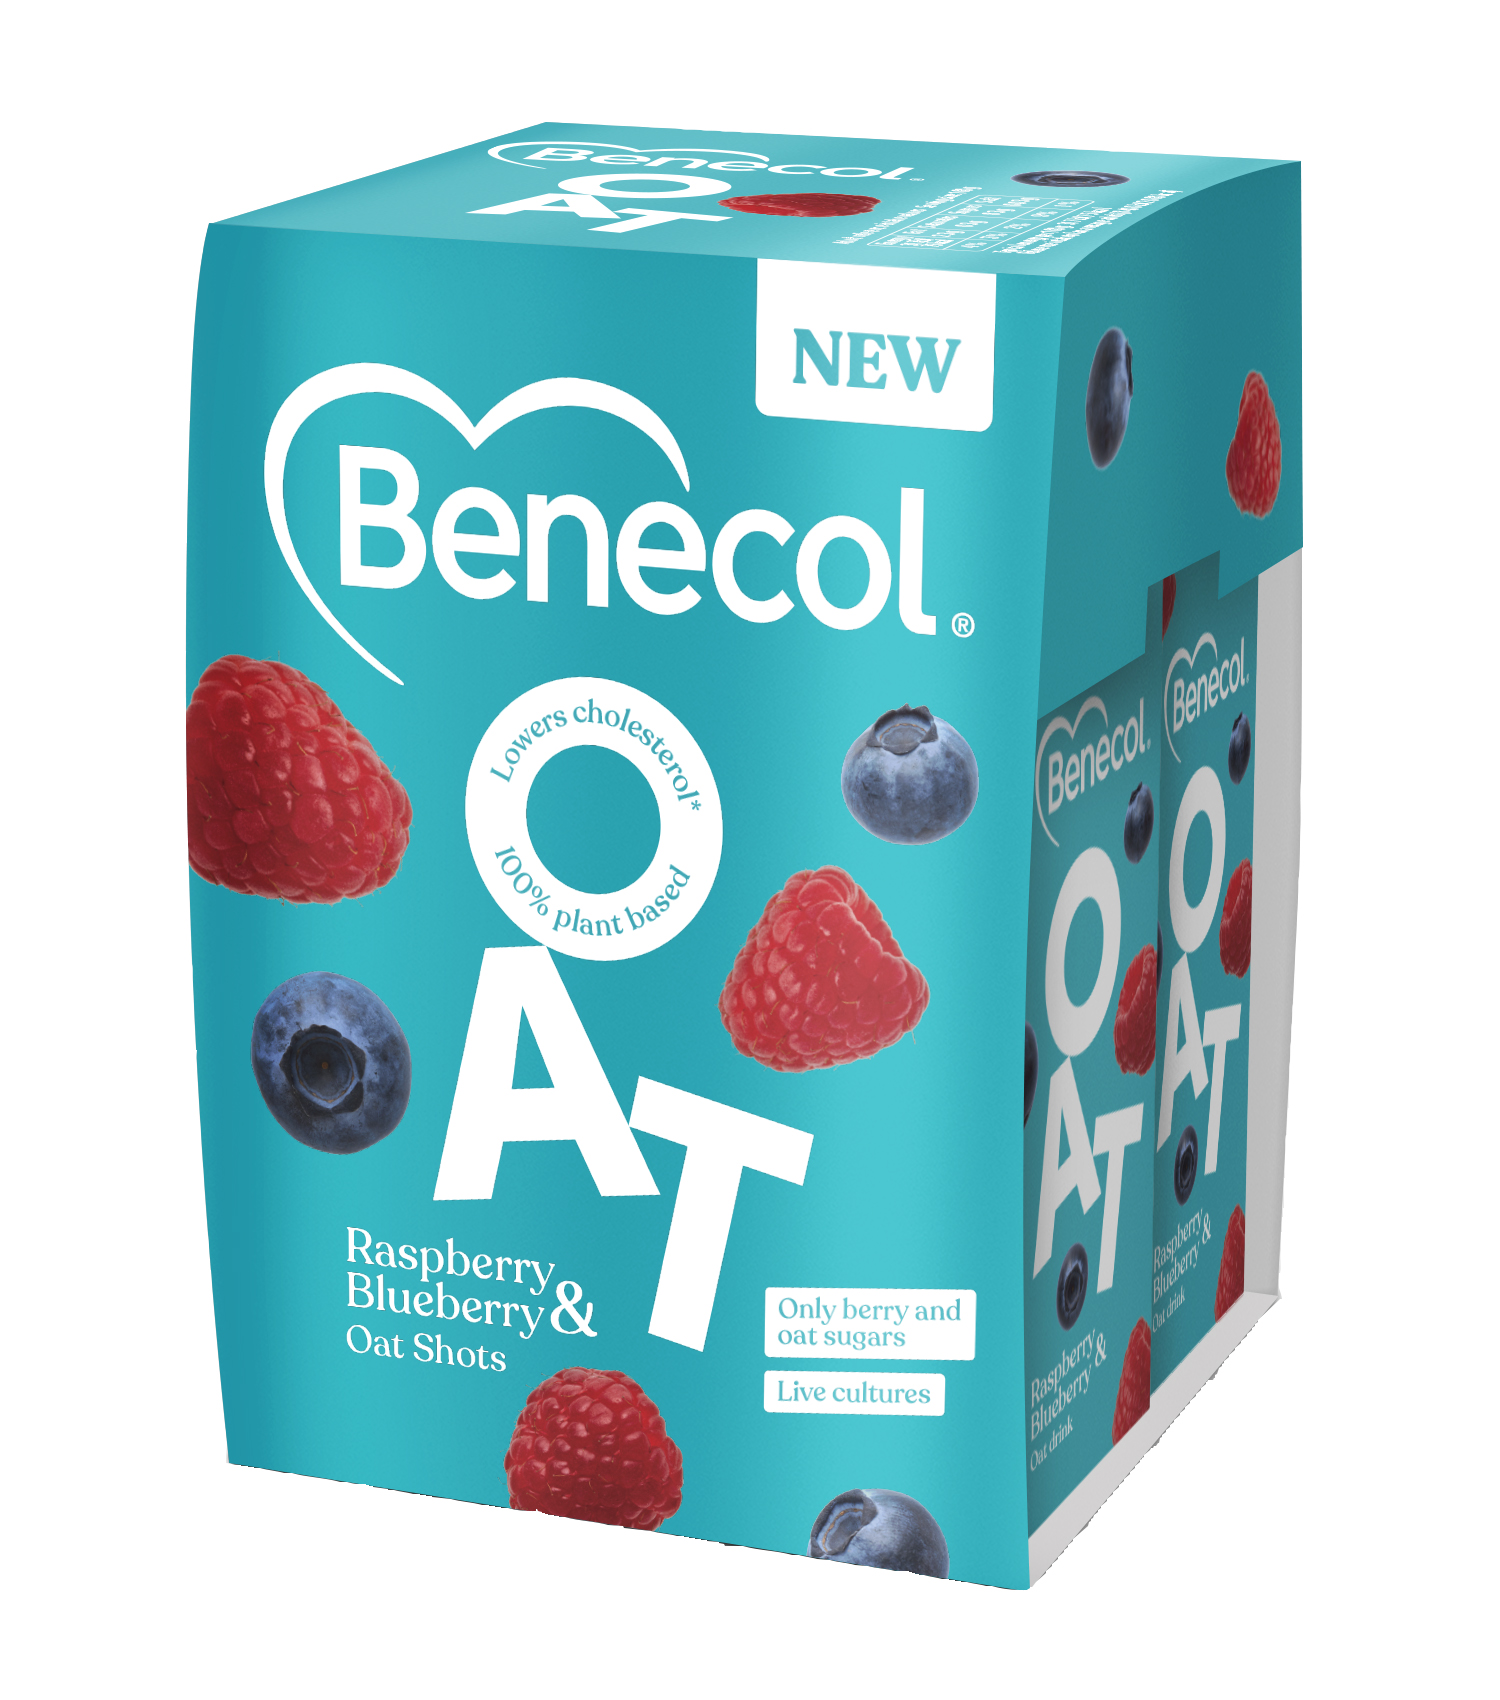 Benecol launches new innovative OAT range